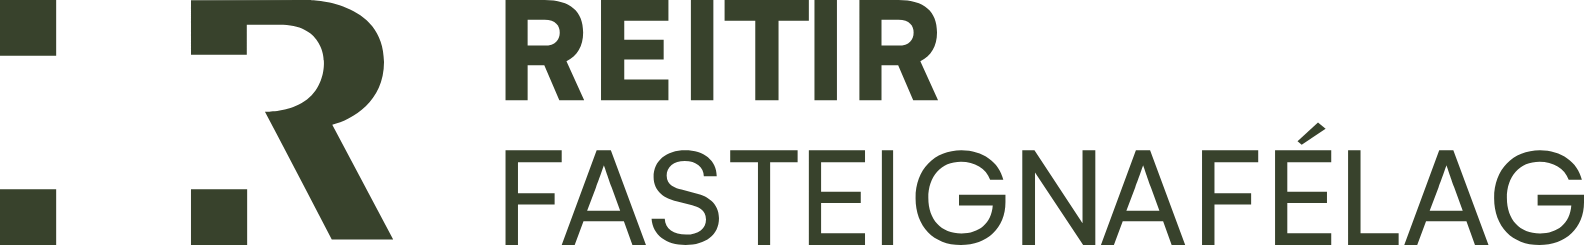 Reitir fasteignafélag logo large (transparent PNG)